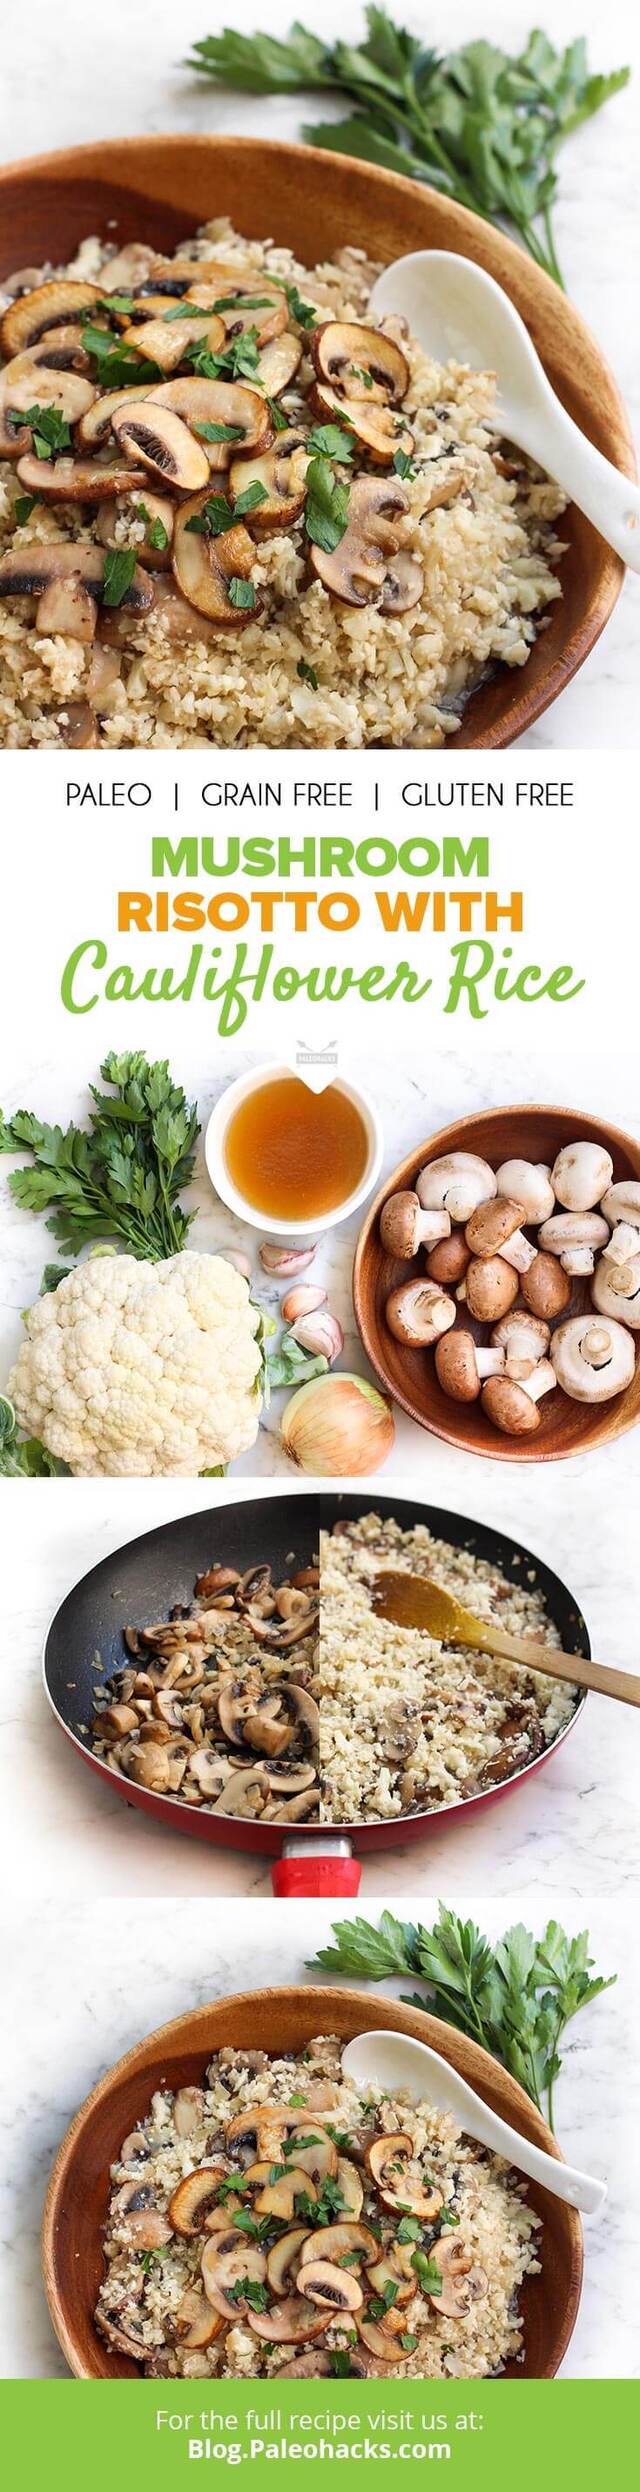 Mushroom Risotto with Cauliflower Rice